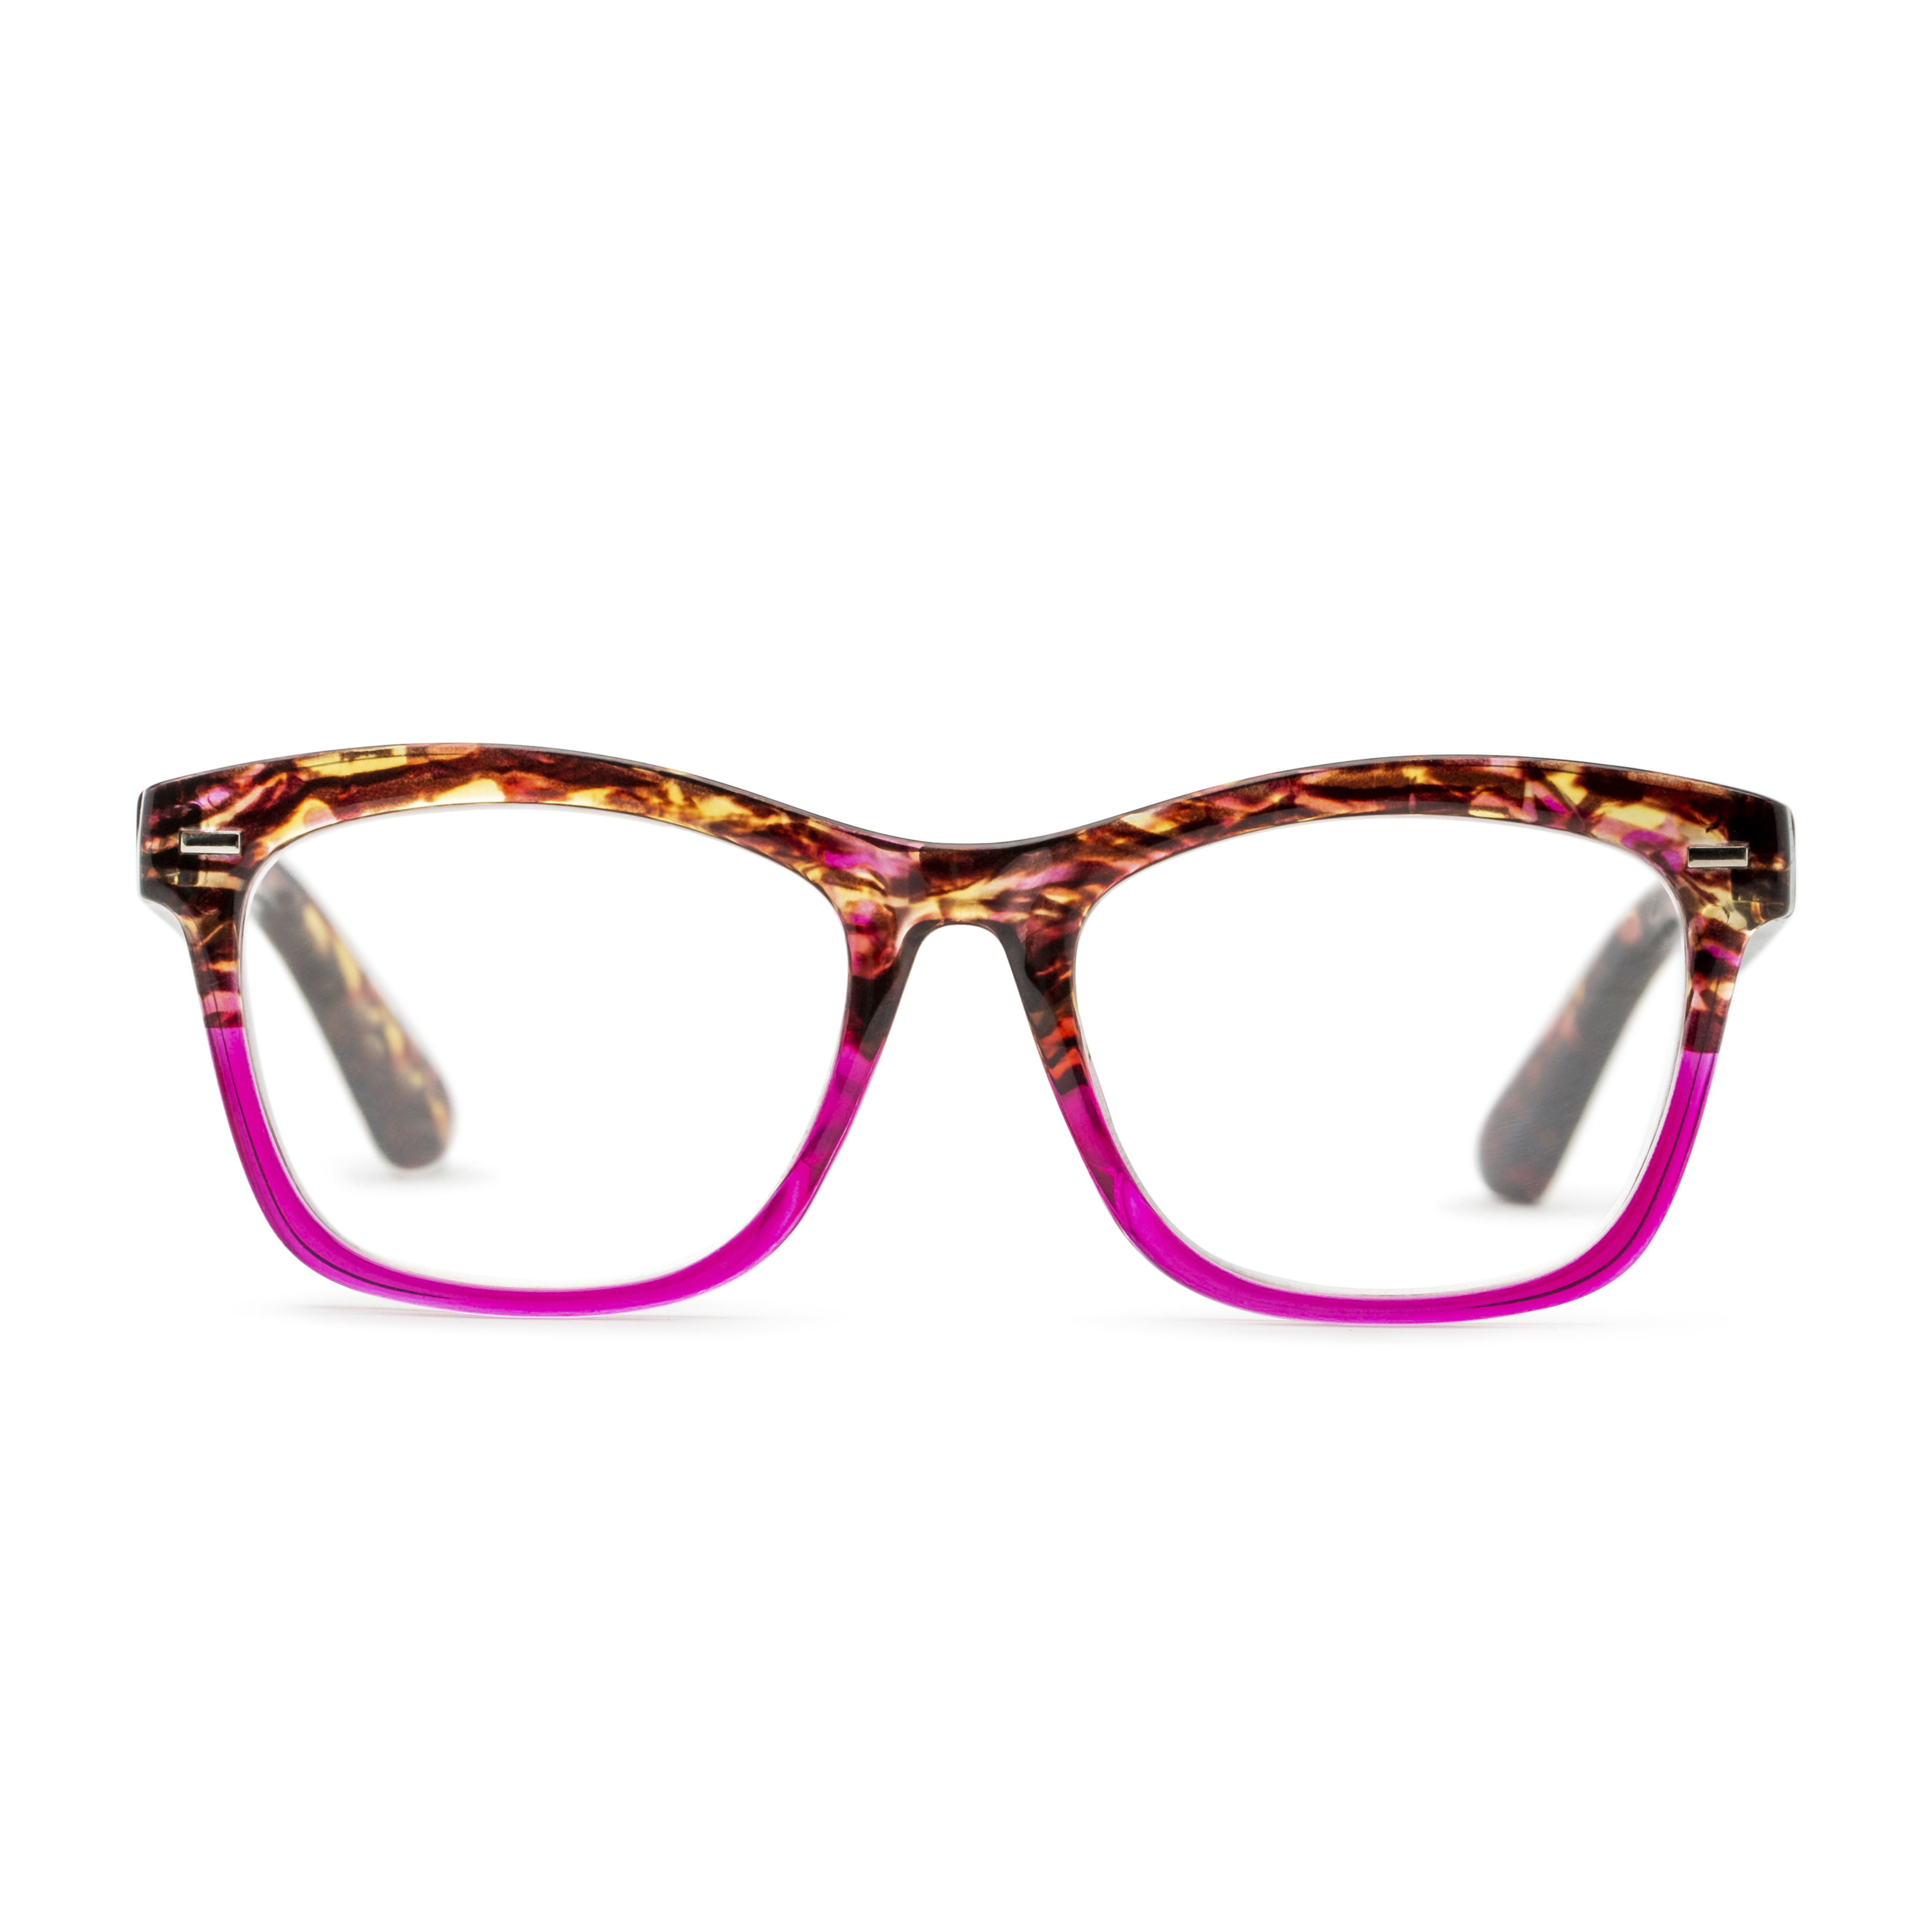 Women's Cat Eye Reading Glasses In Brown/Pink By Foster Grant - Stapleton - +3.00